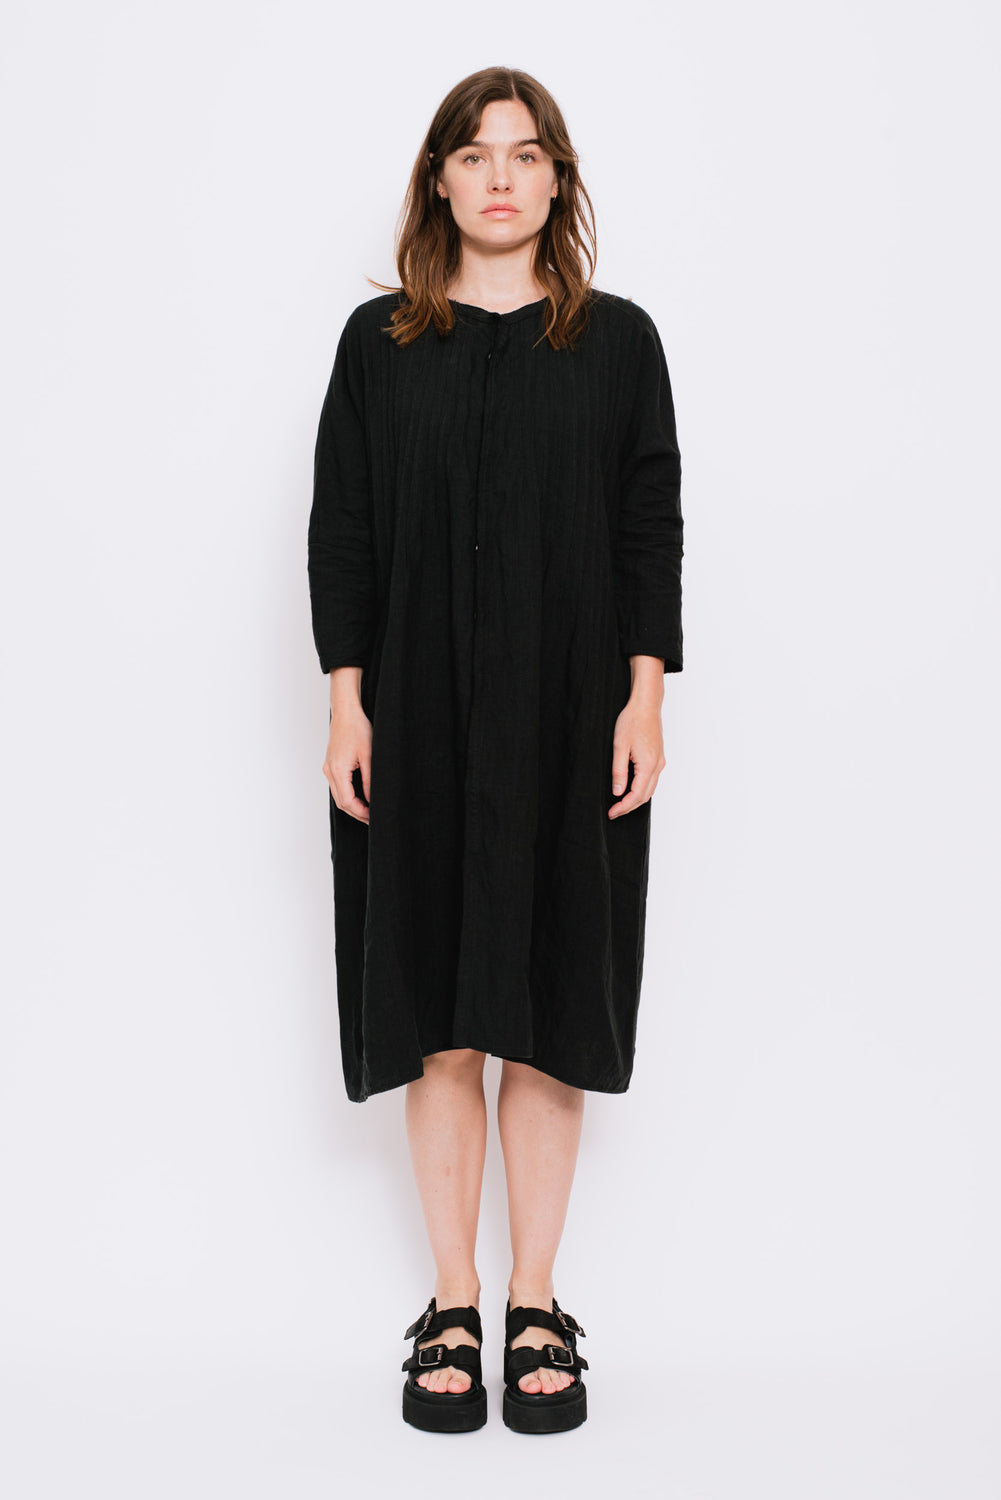 French Linen Pin Tucks O'KEEFE Dress Black – Moth